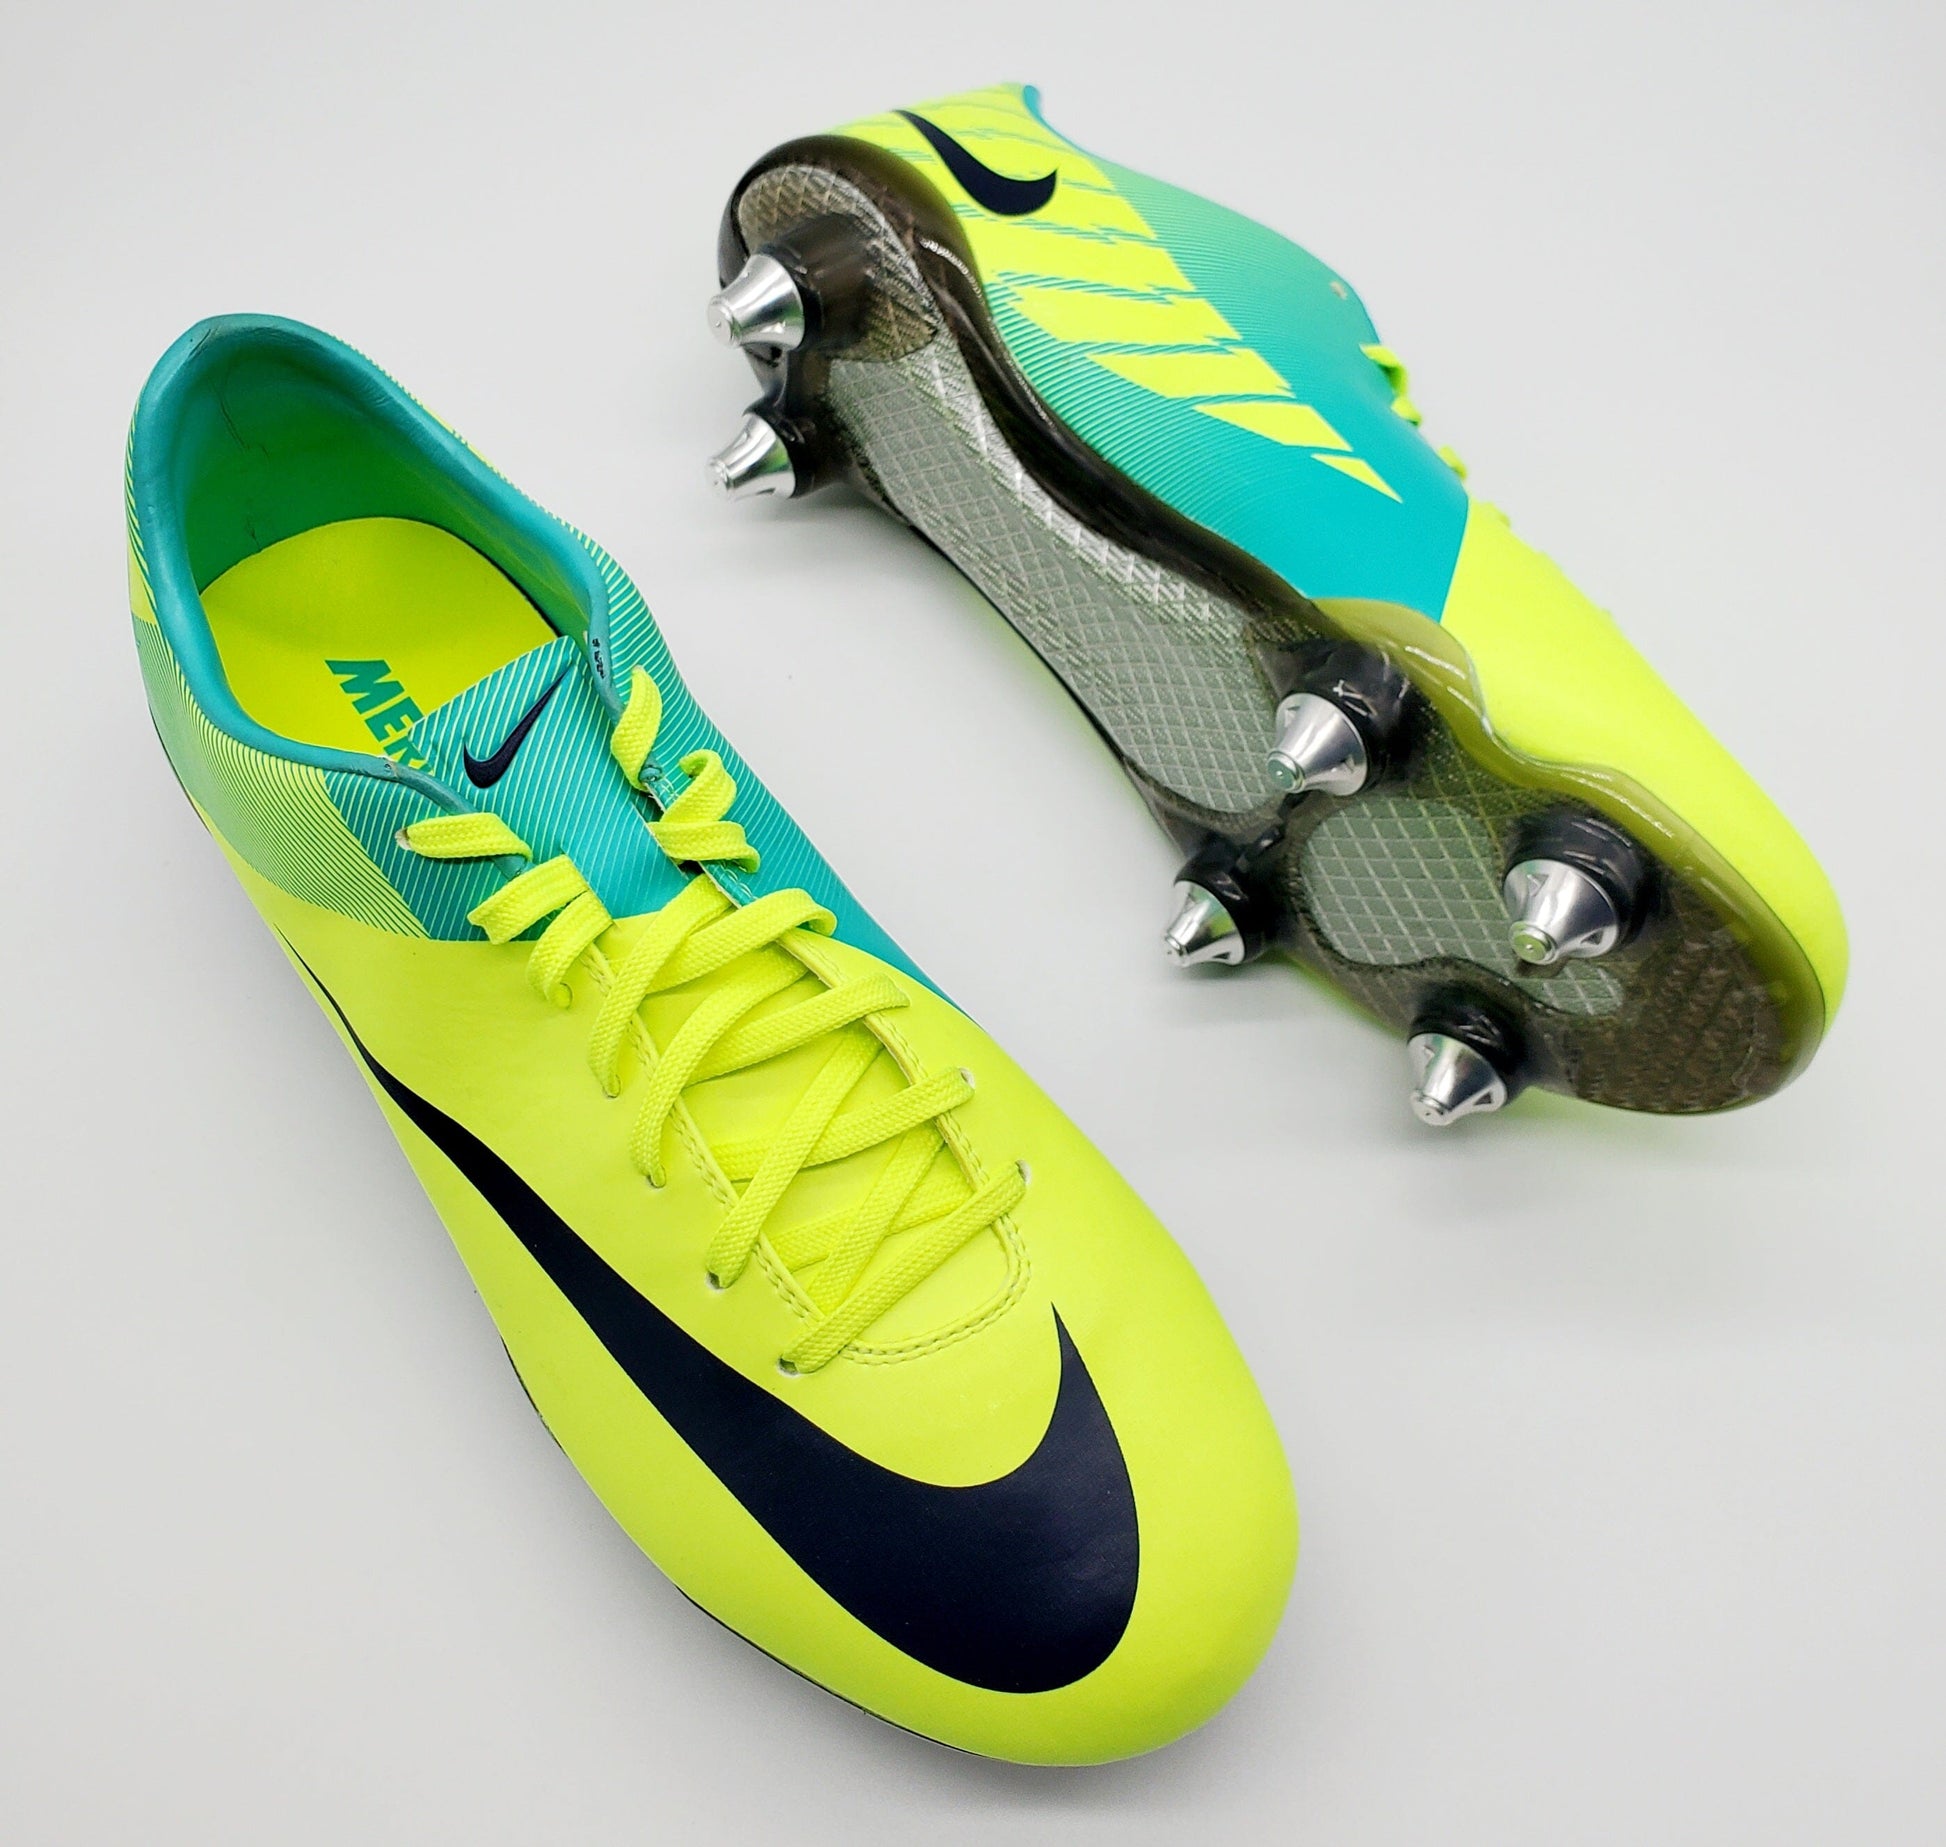 Nike Vapor SG – Classic Football Boots